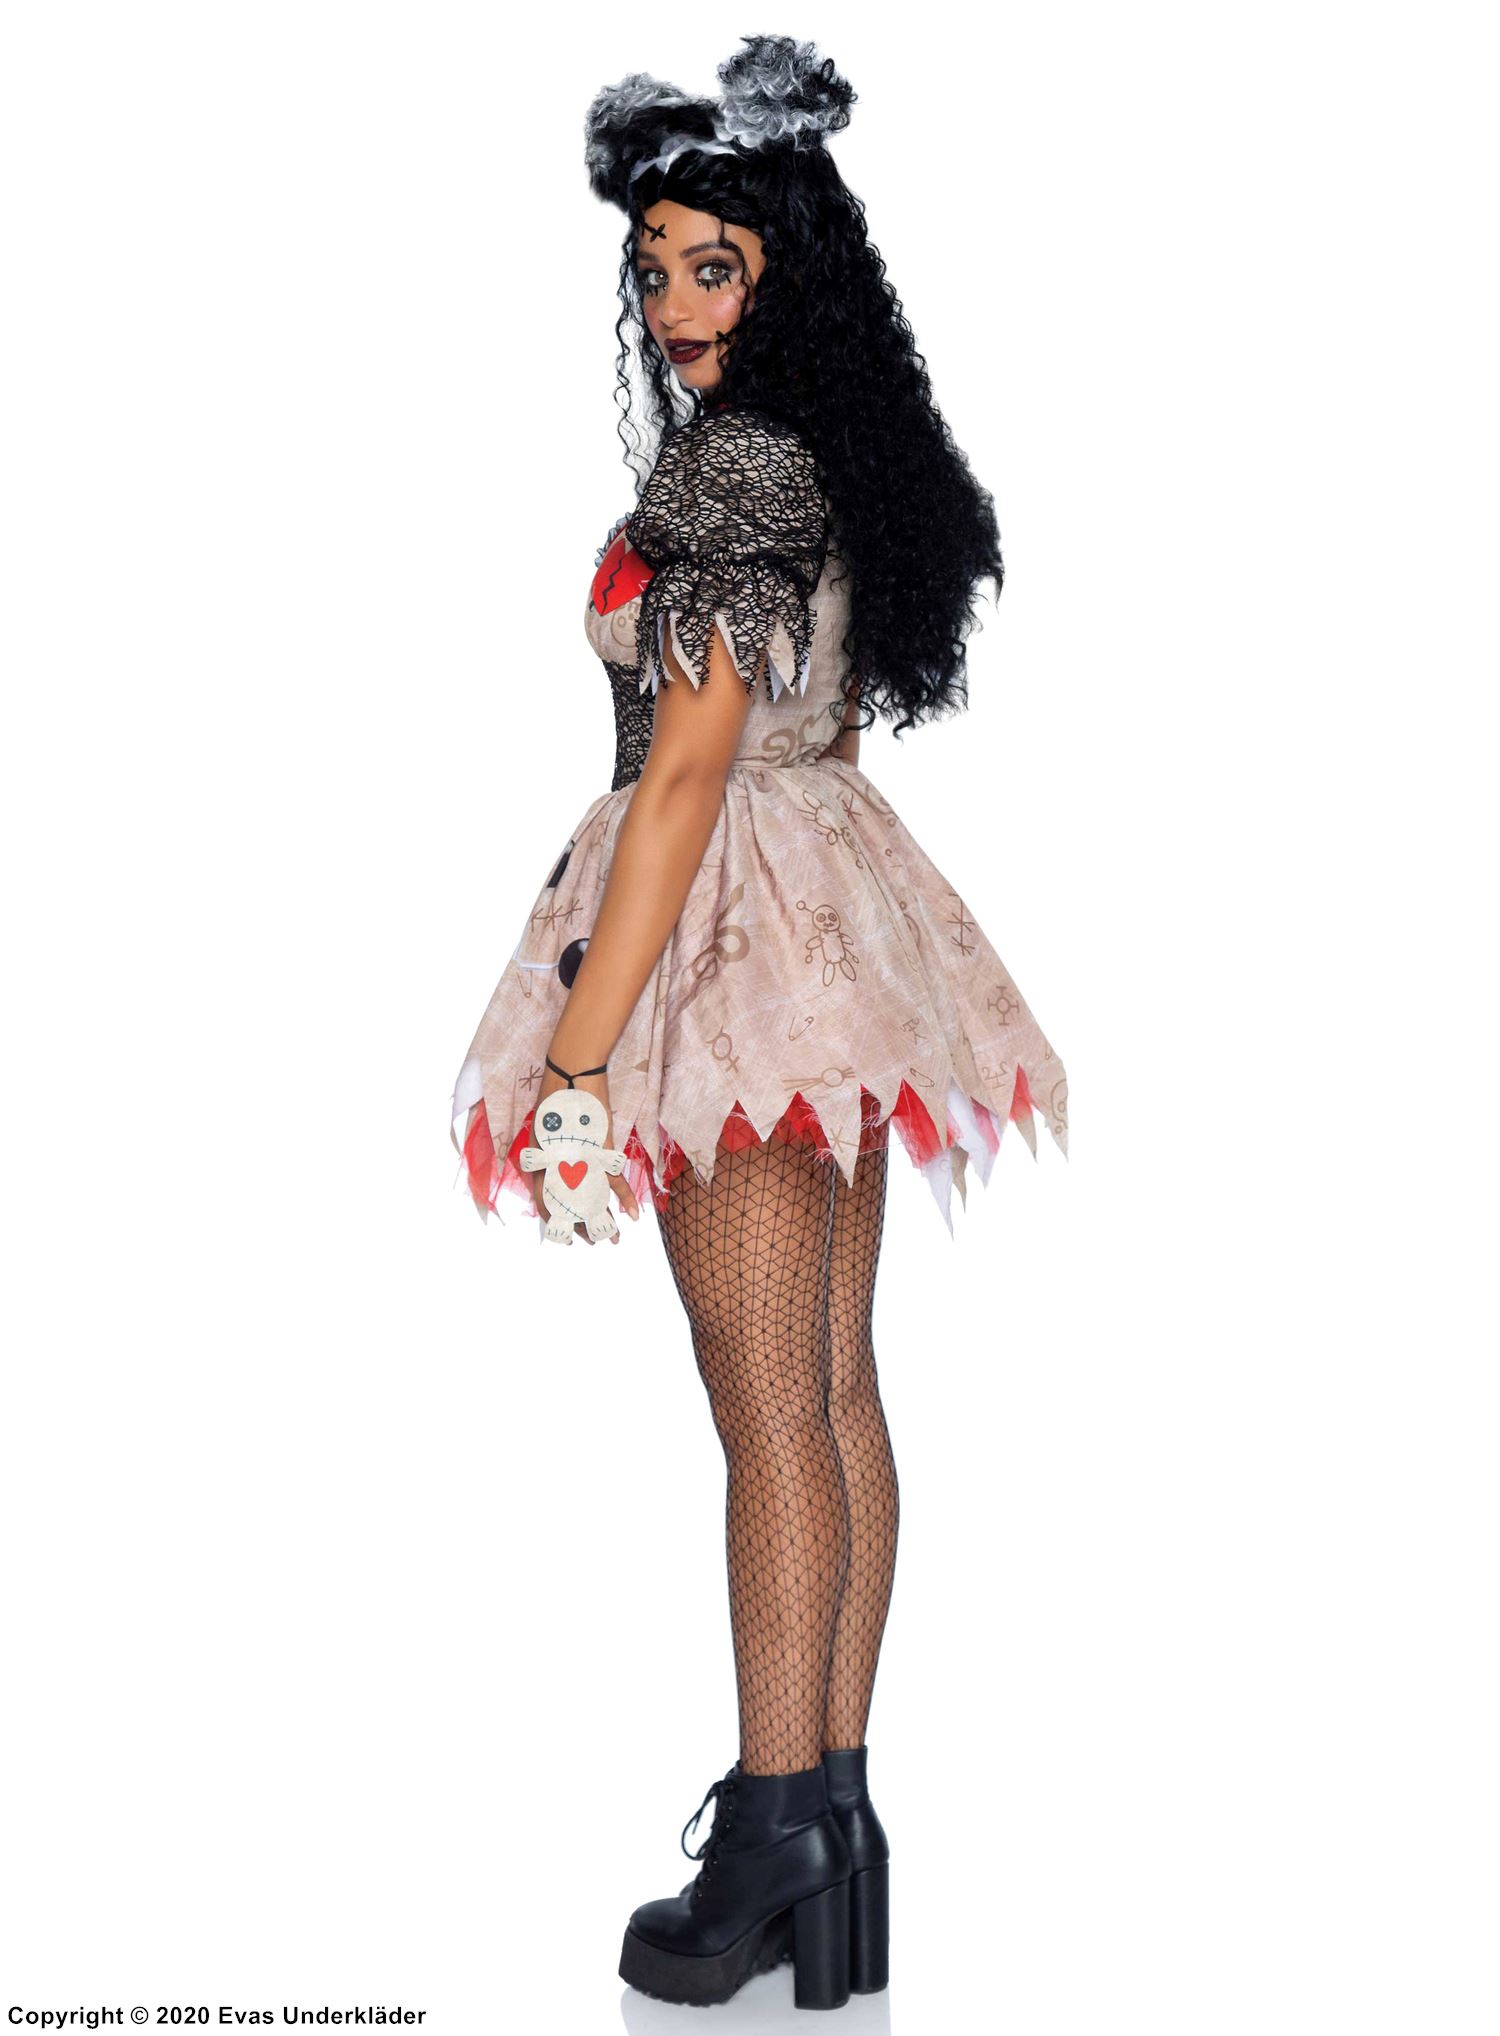 Voodoo doll, costume dress, tatters, stitches